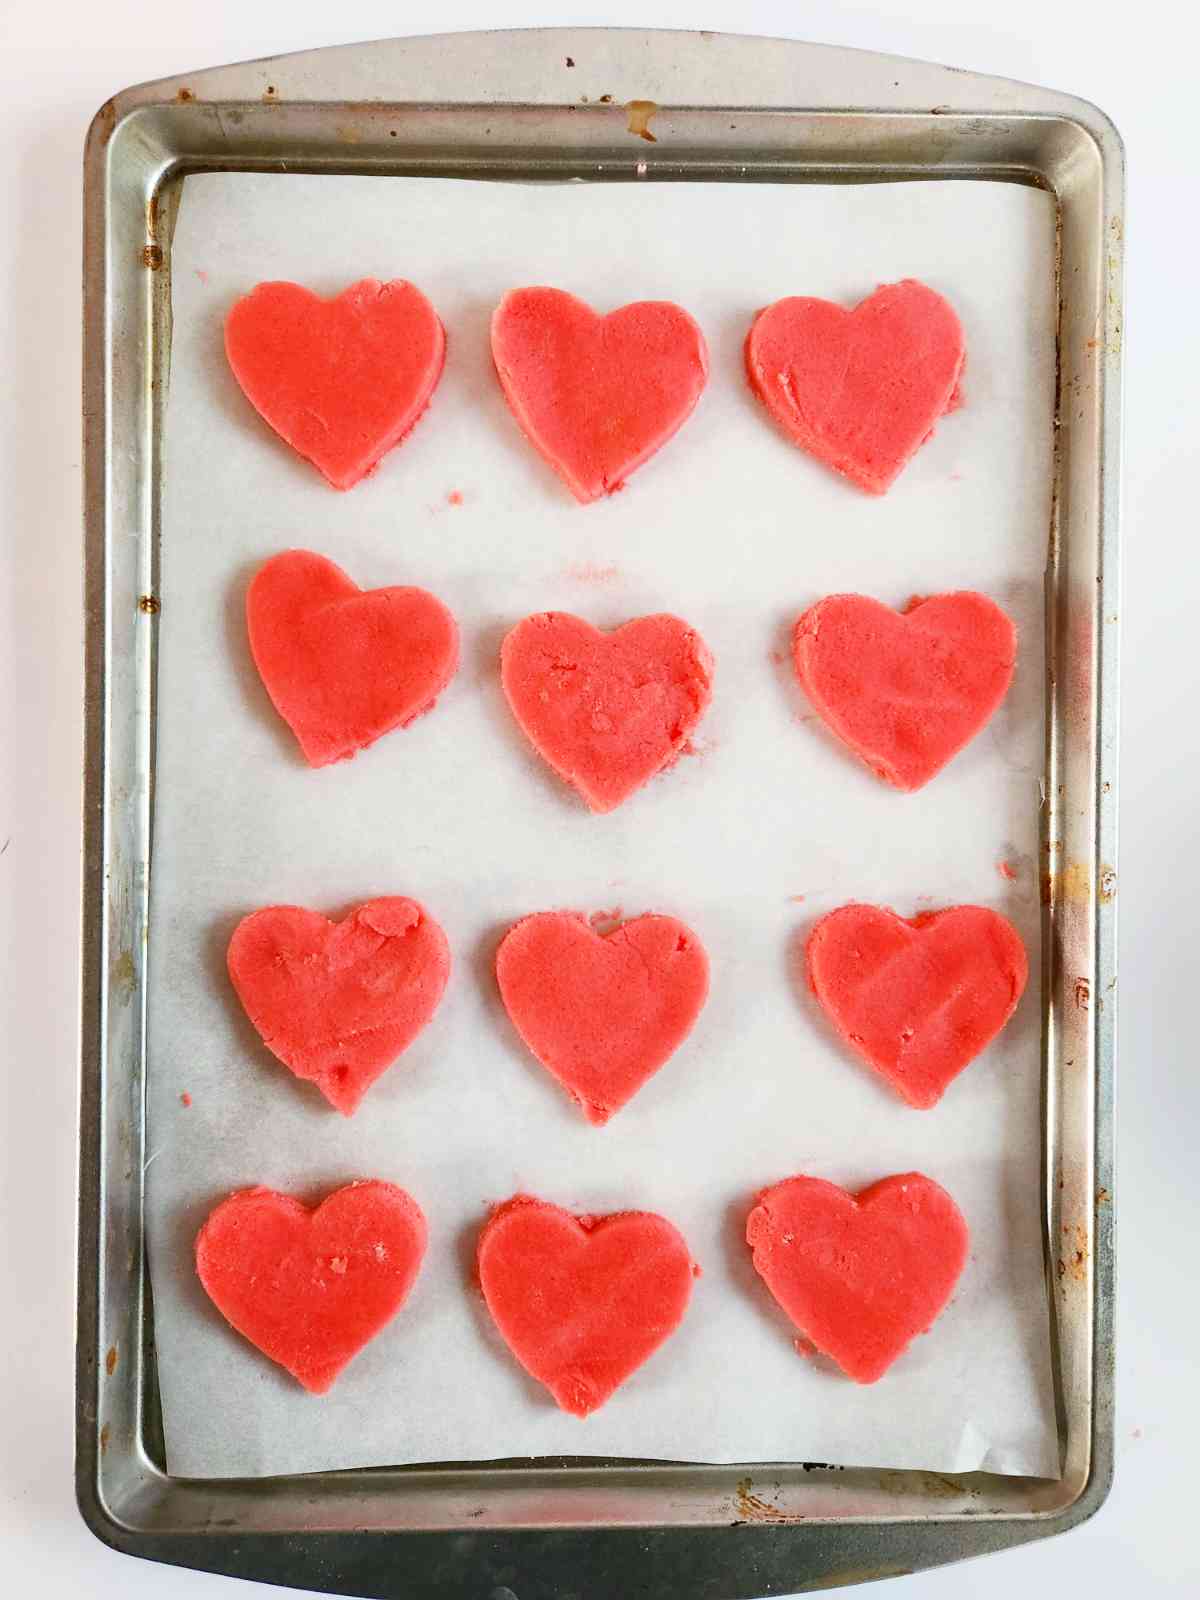 heart shaped pink sugar cookies on a baking sheet ready to bake.